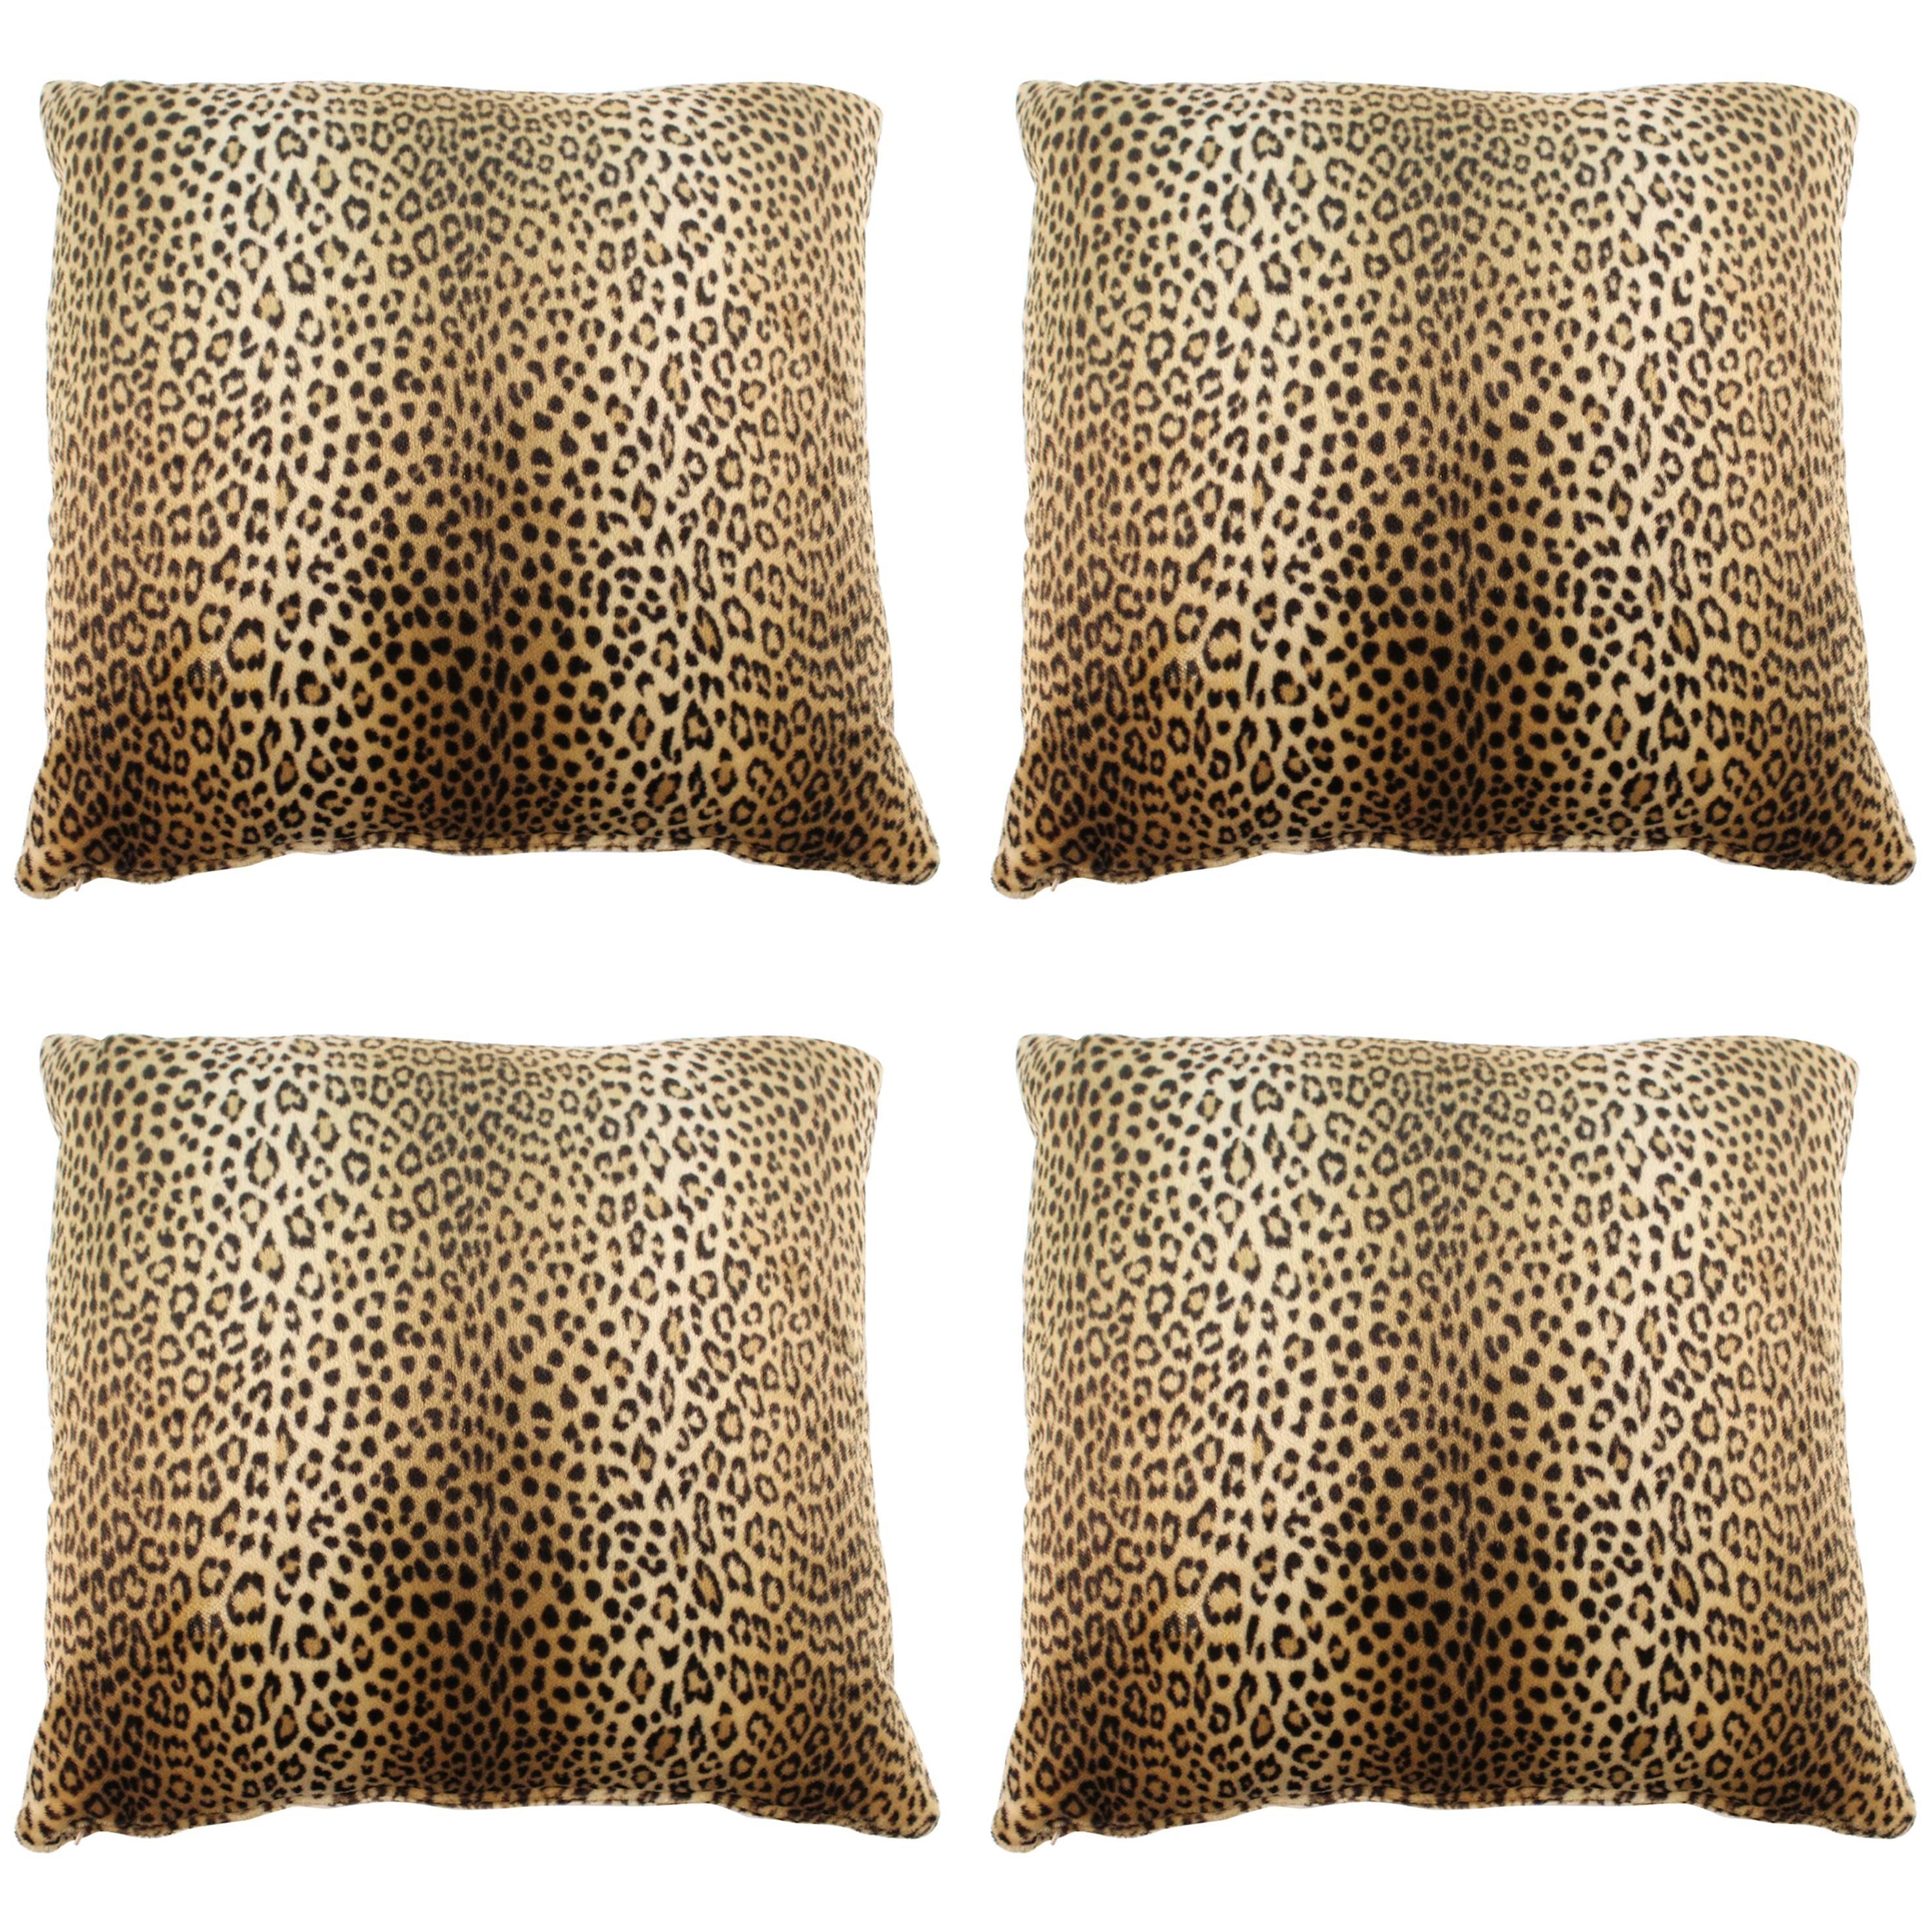 Four Leopard Print Pillows